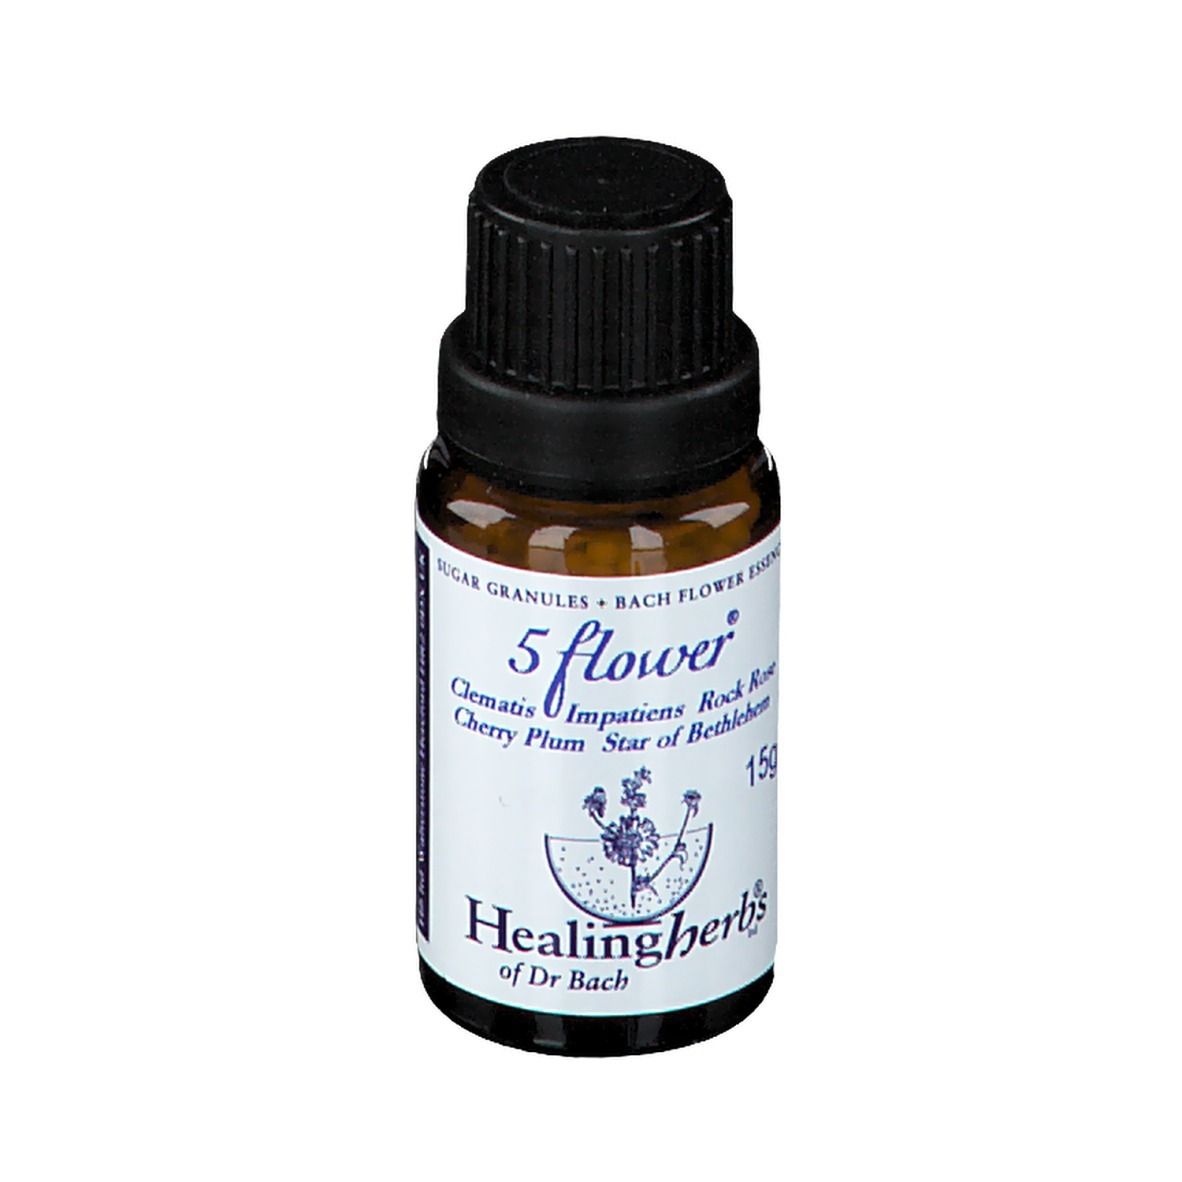 Healing Herbs 5 Flower® Granules